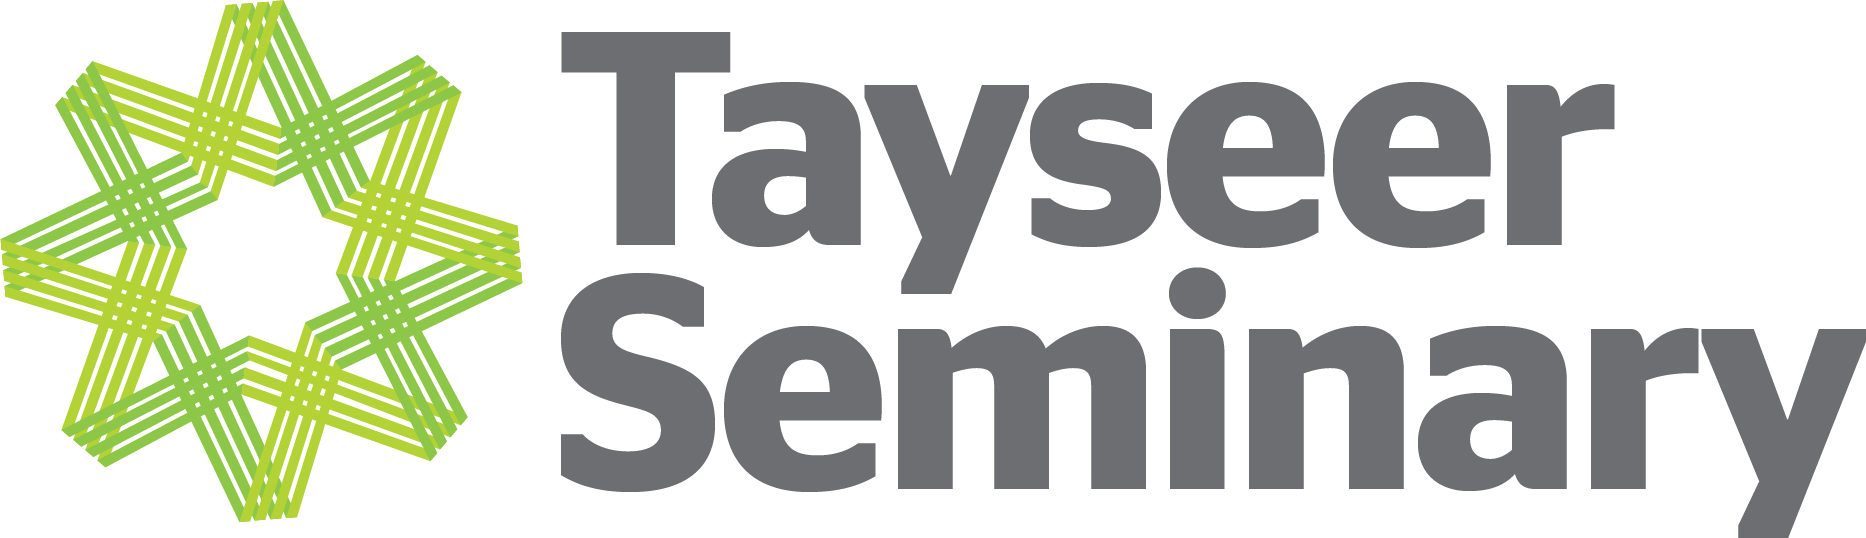 Tayseer Seminary logo